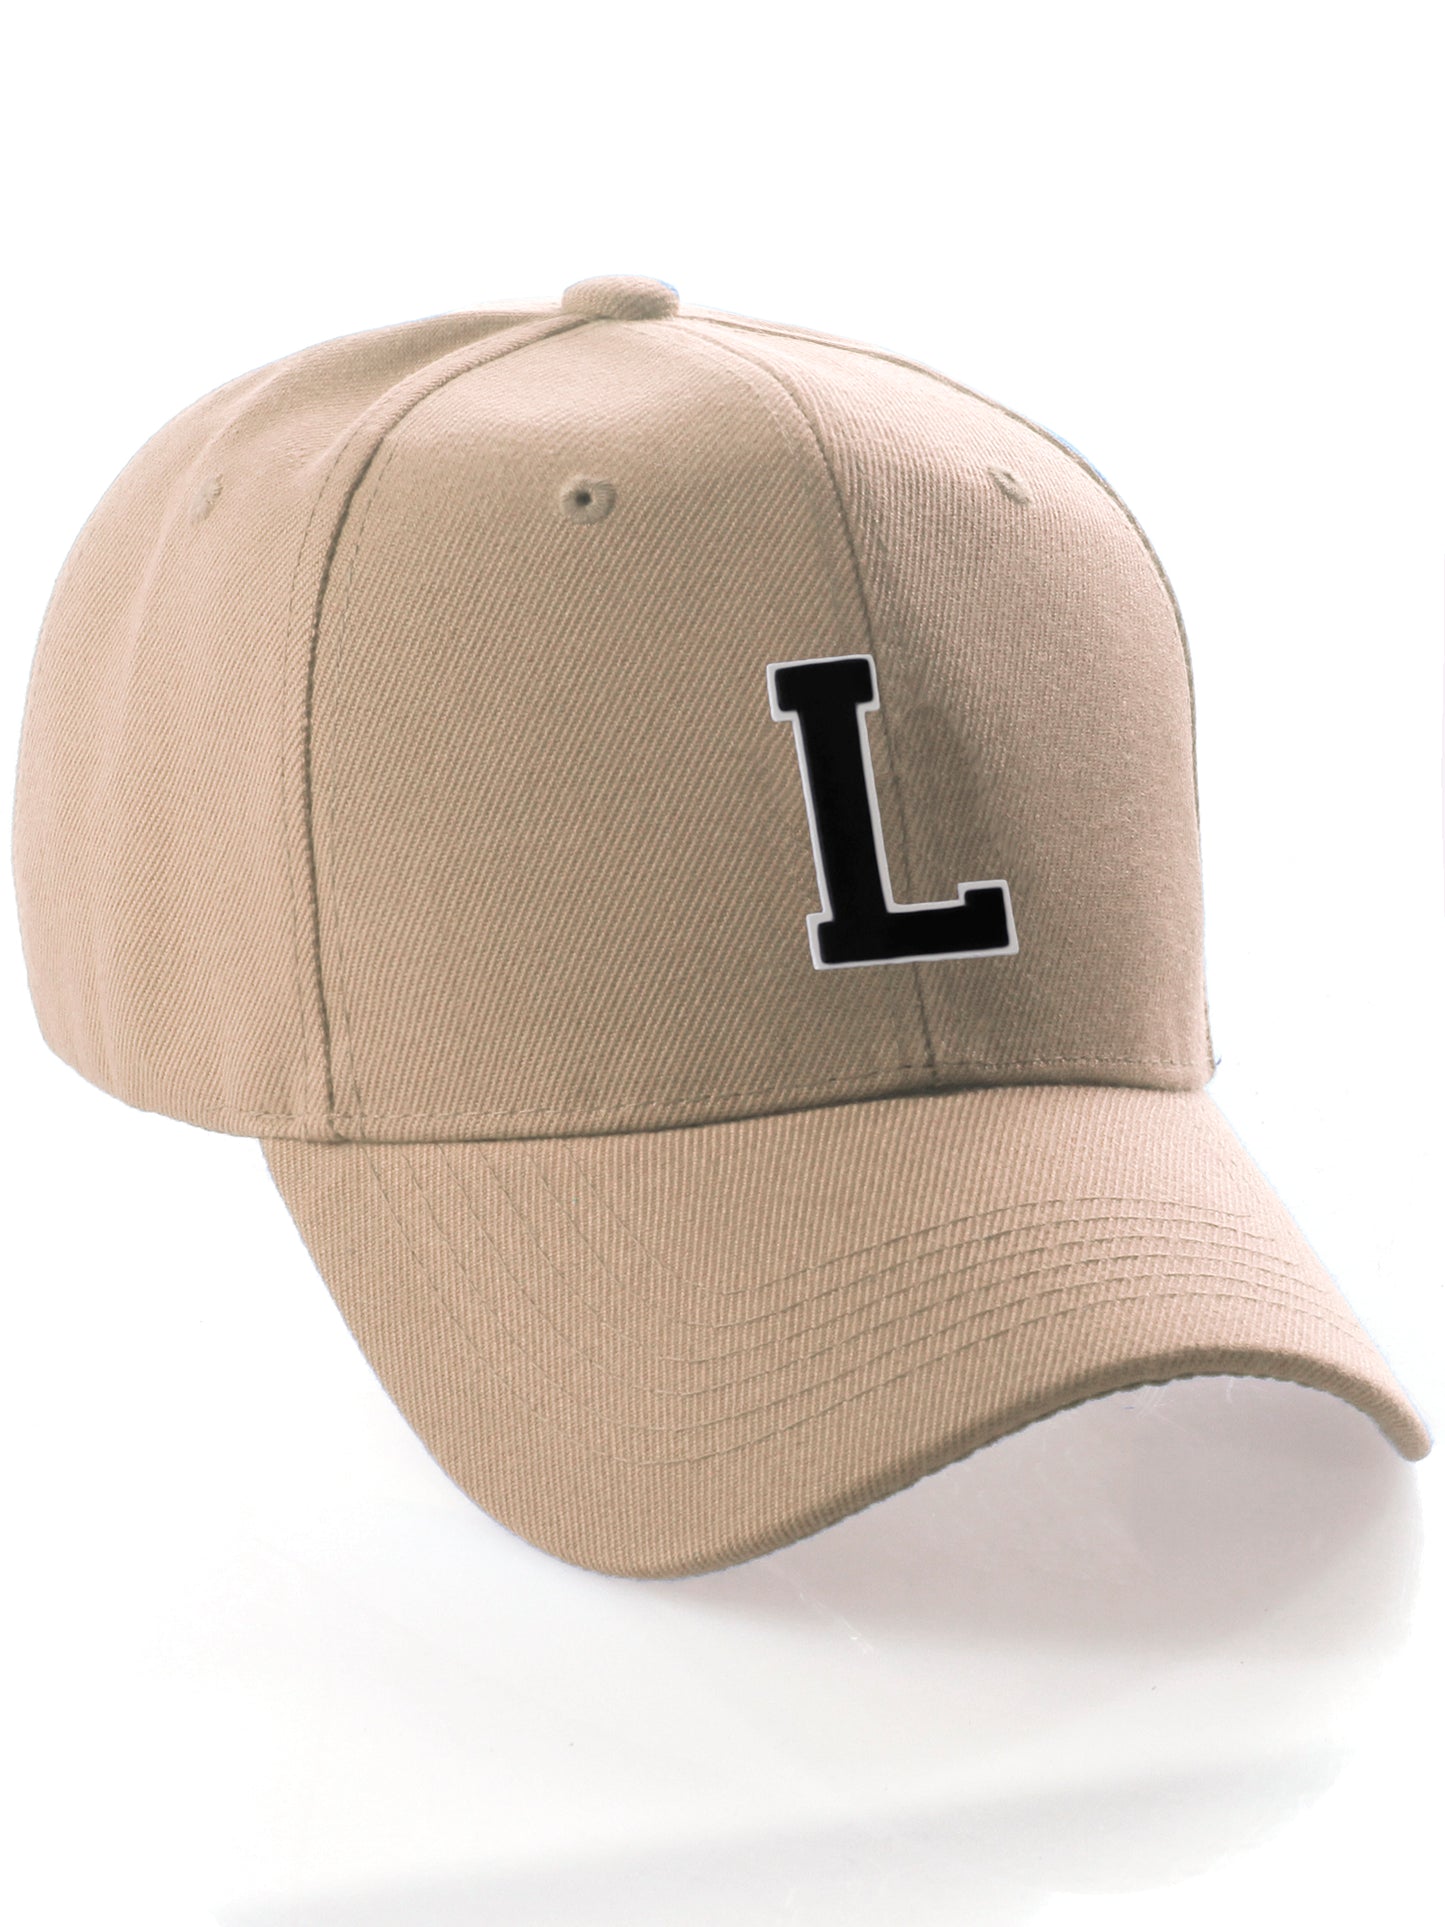 Classic Baseball Hat Custom A to Z Initial Team Letter, Khaki Cap White Black